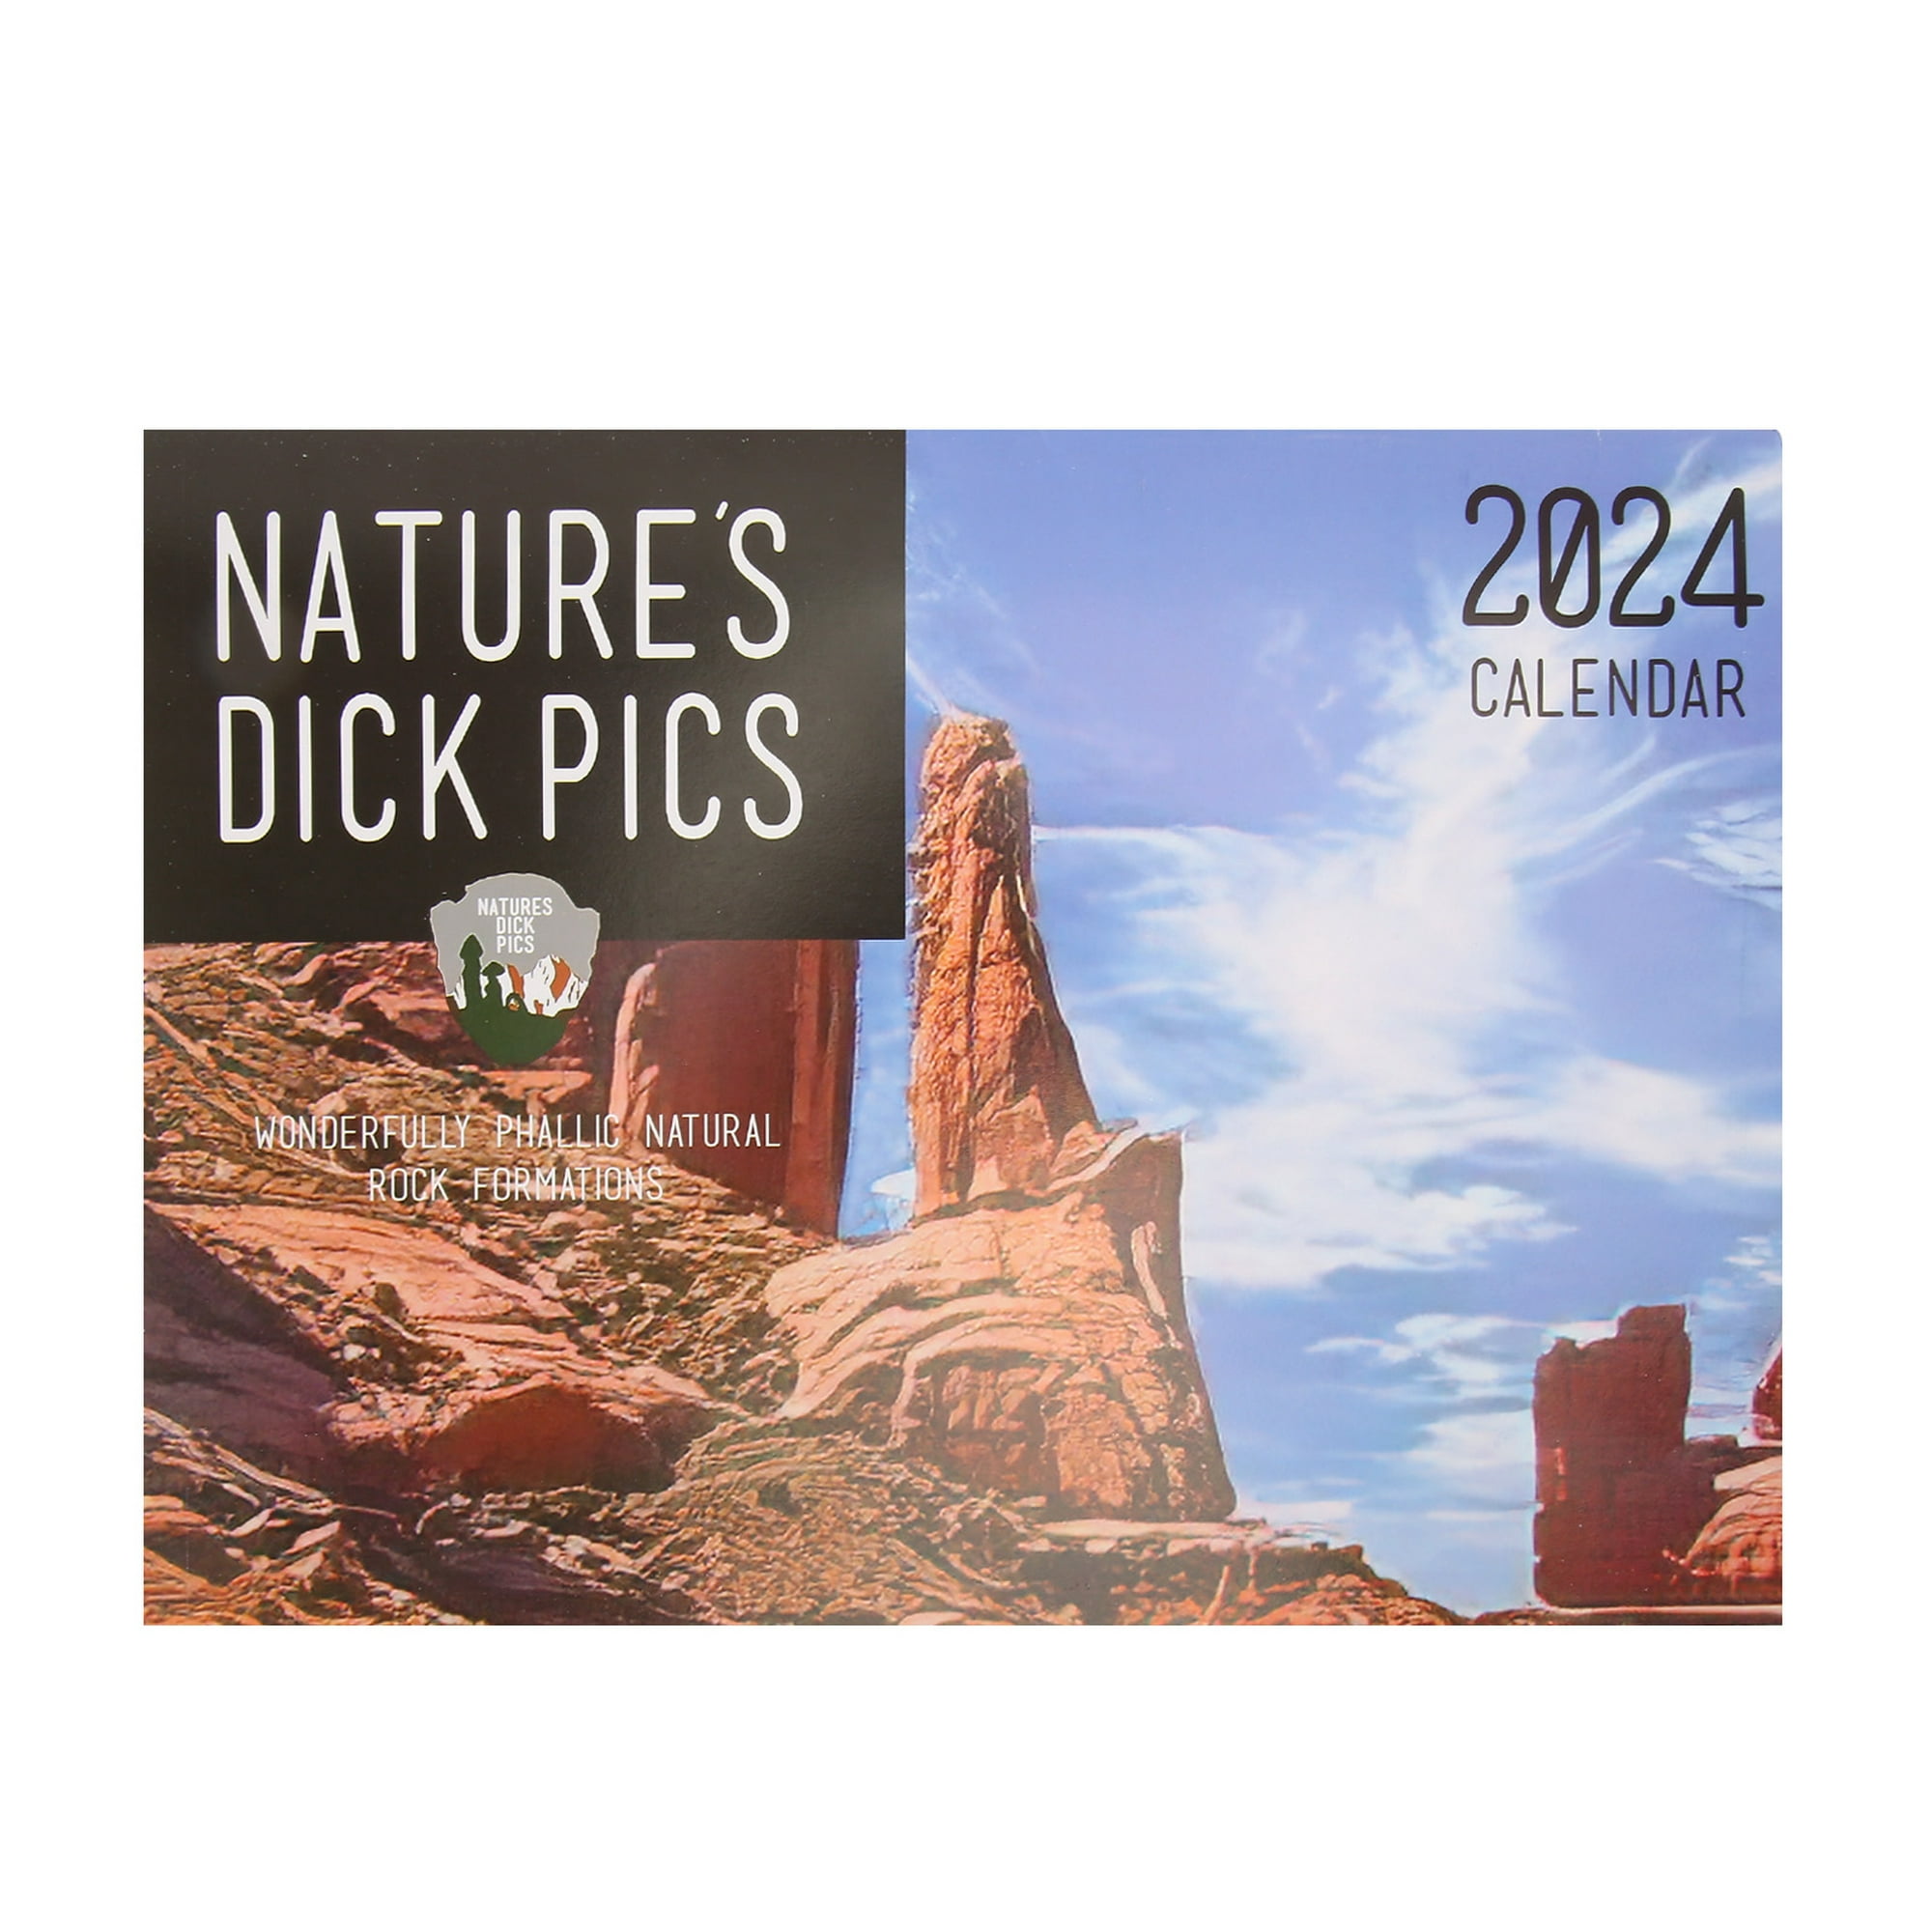 Calendario 2024 Nature's Dick Pics Calendario Natures 2024 Calendario  Natures colgante Calendario divertido 2024 Calendario divertido Calendario  2024